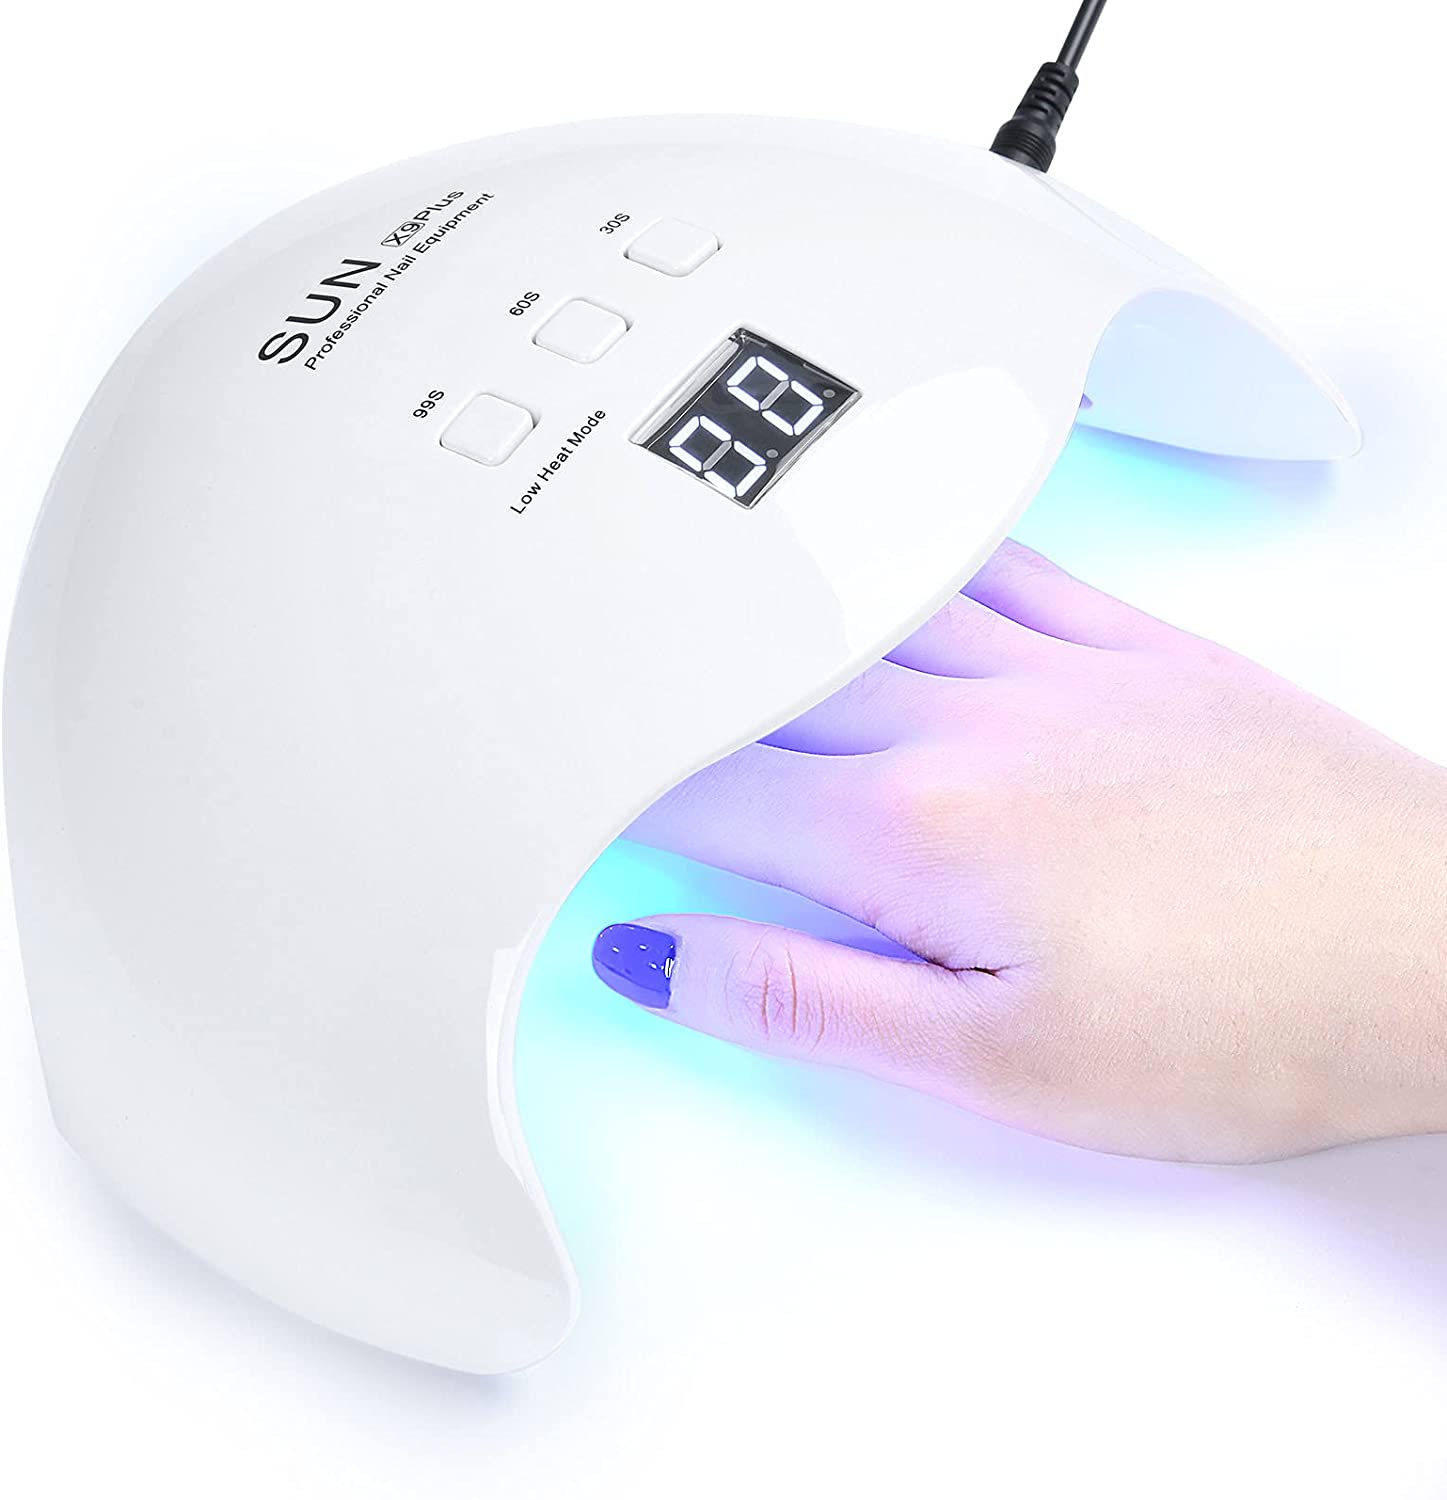 DIOZO Auto-Sensor LED Nail Lamp Dryer